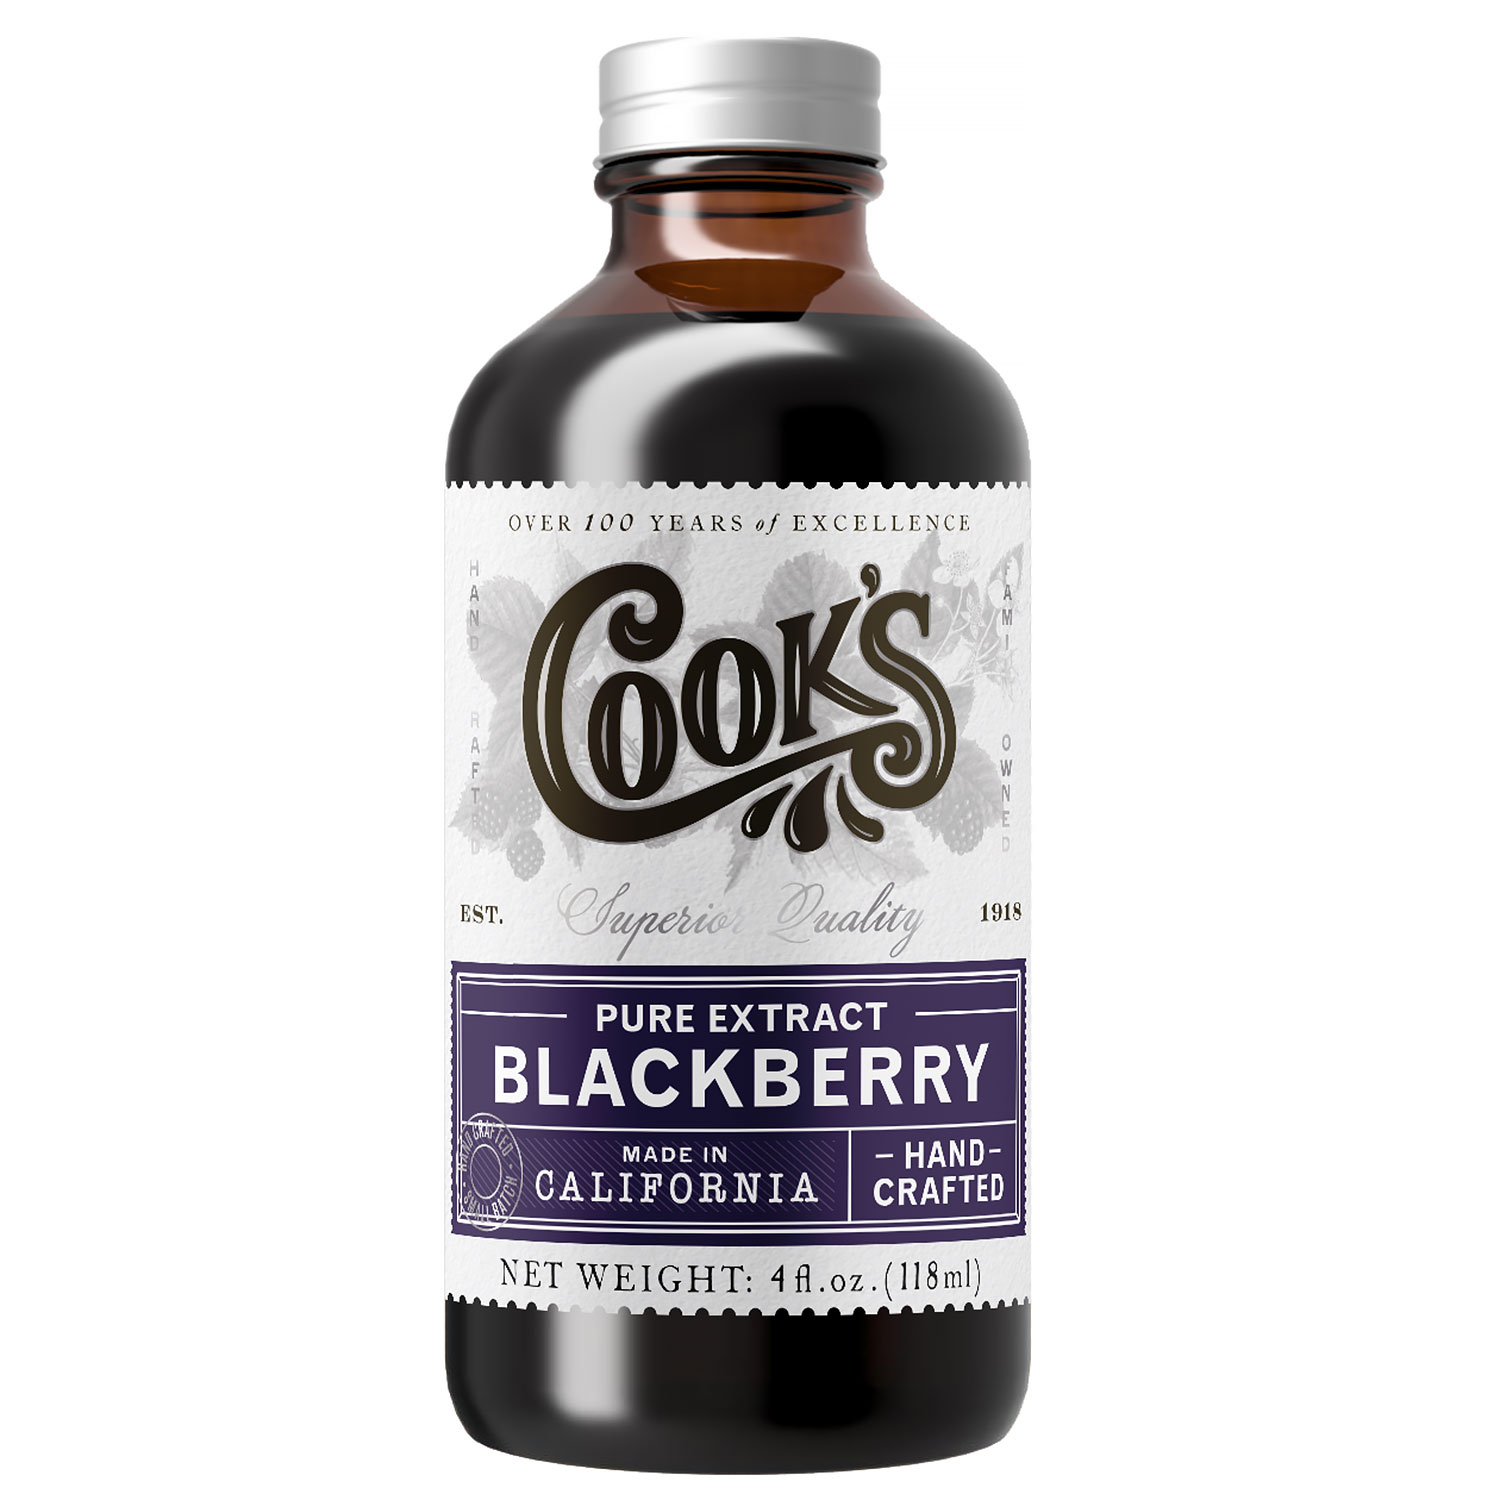 Cook's Pure Blackberry Extract